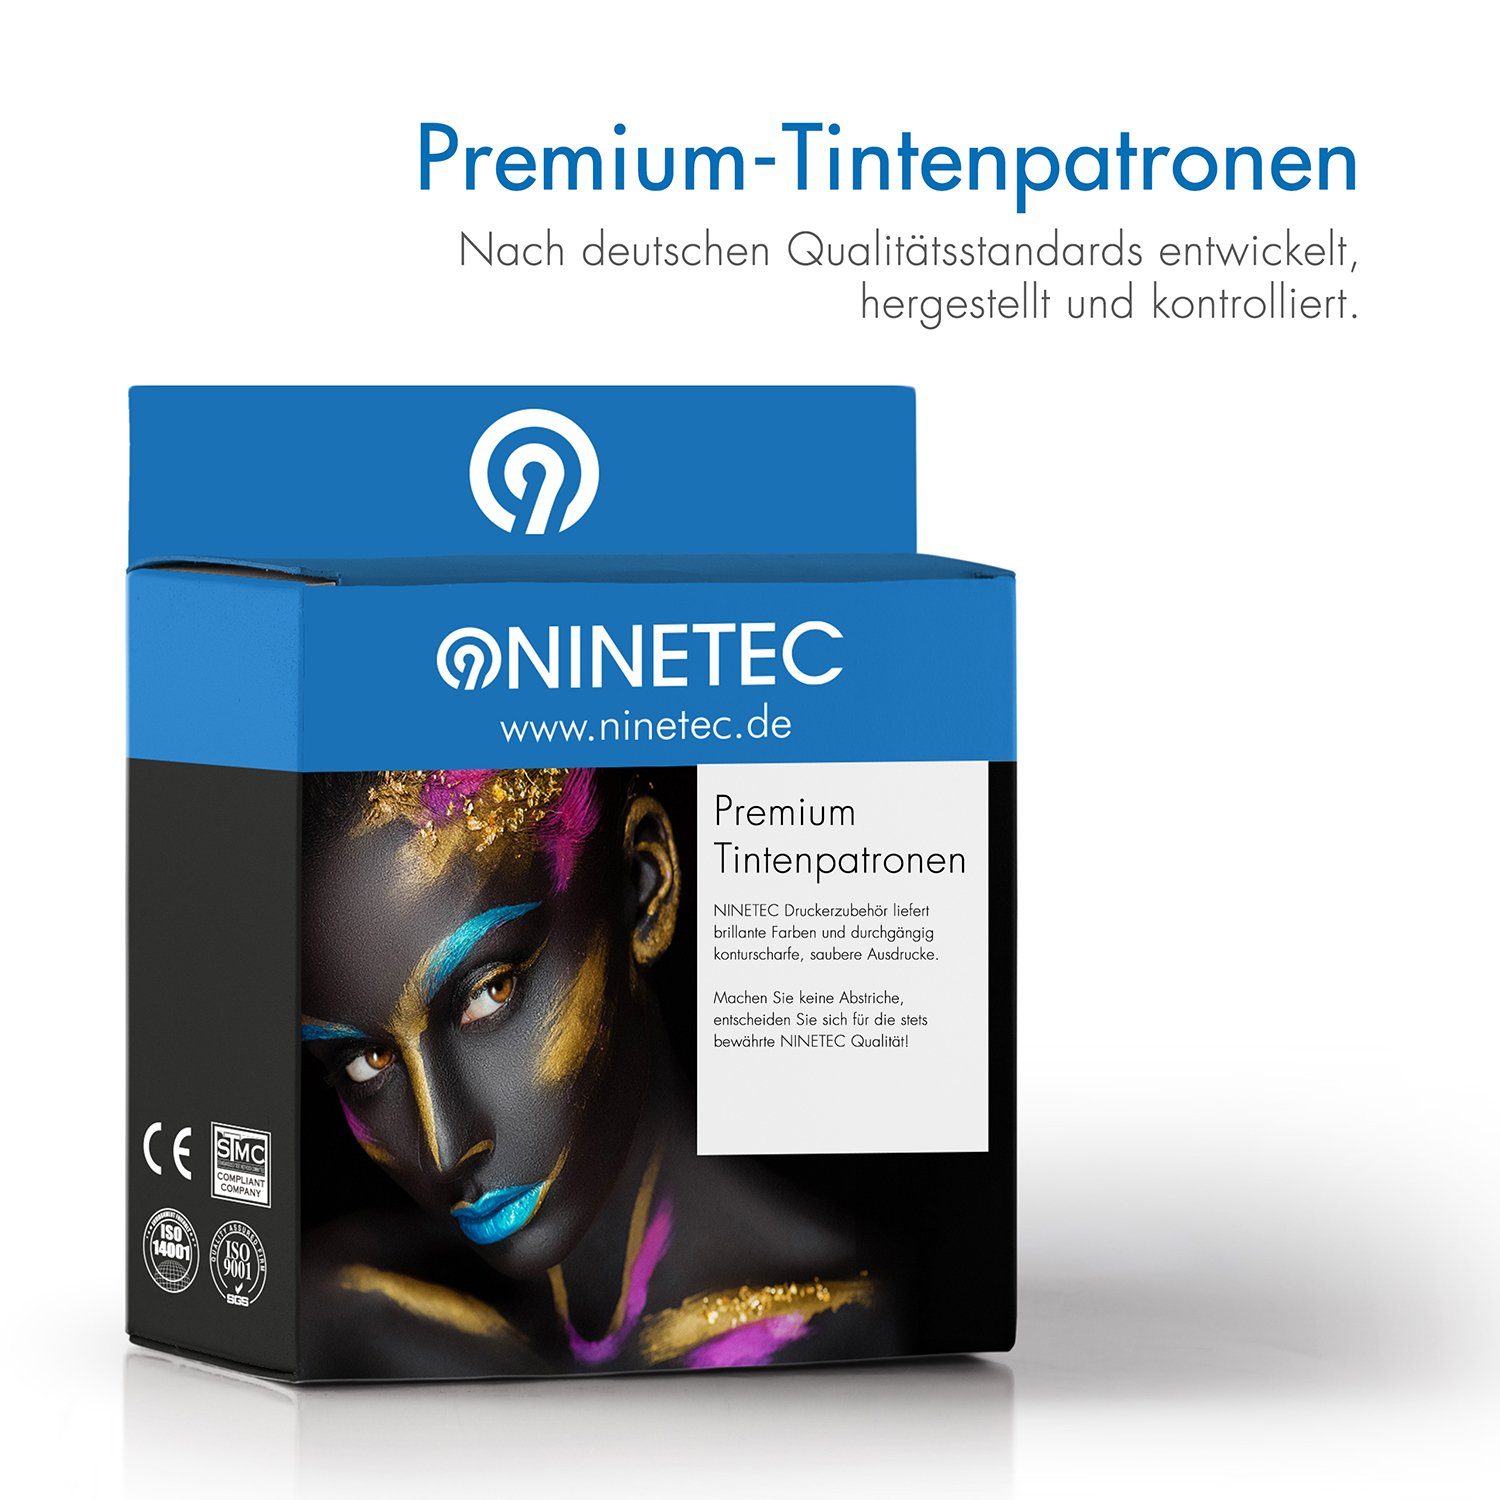 ersetzt T1811 18XL Tintenpatrone Set 2er NINETEC Epson